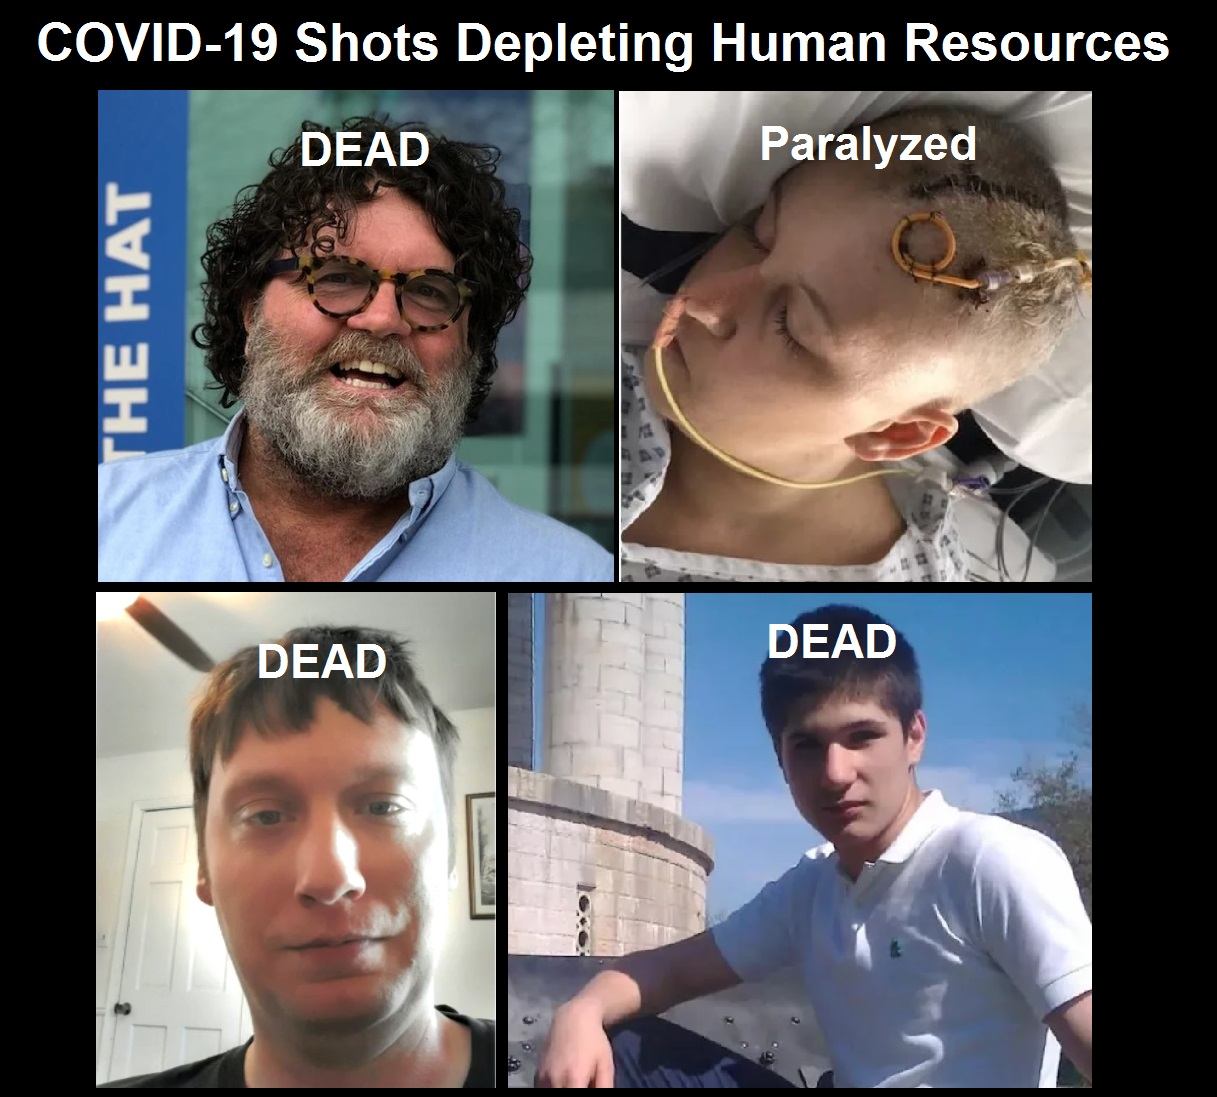 Covid shots depleting human resources